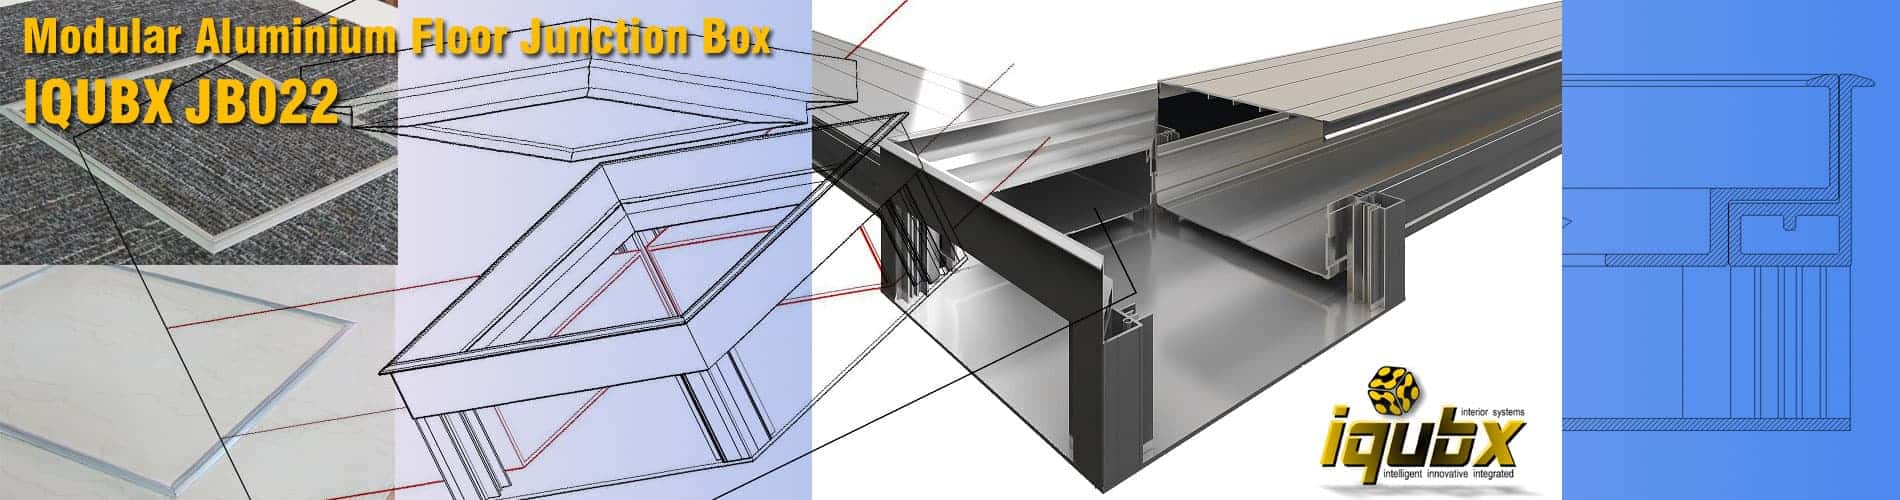 iqubx jb022 modular floor junction box